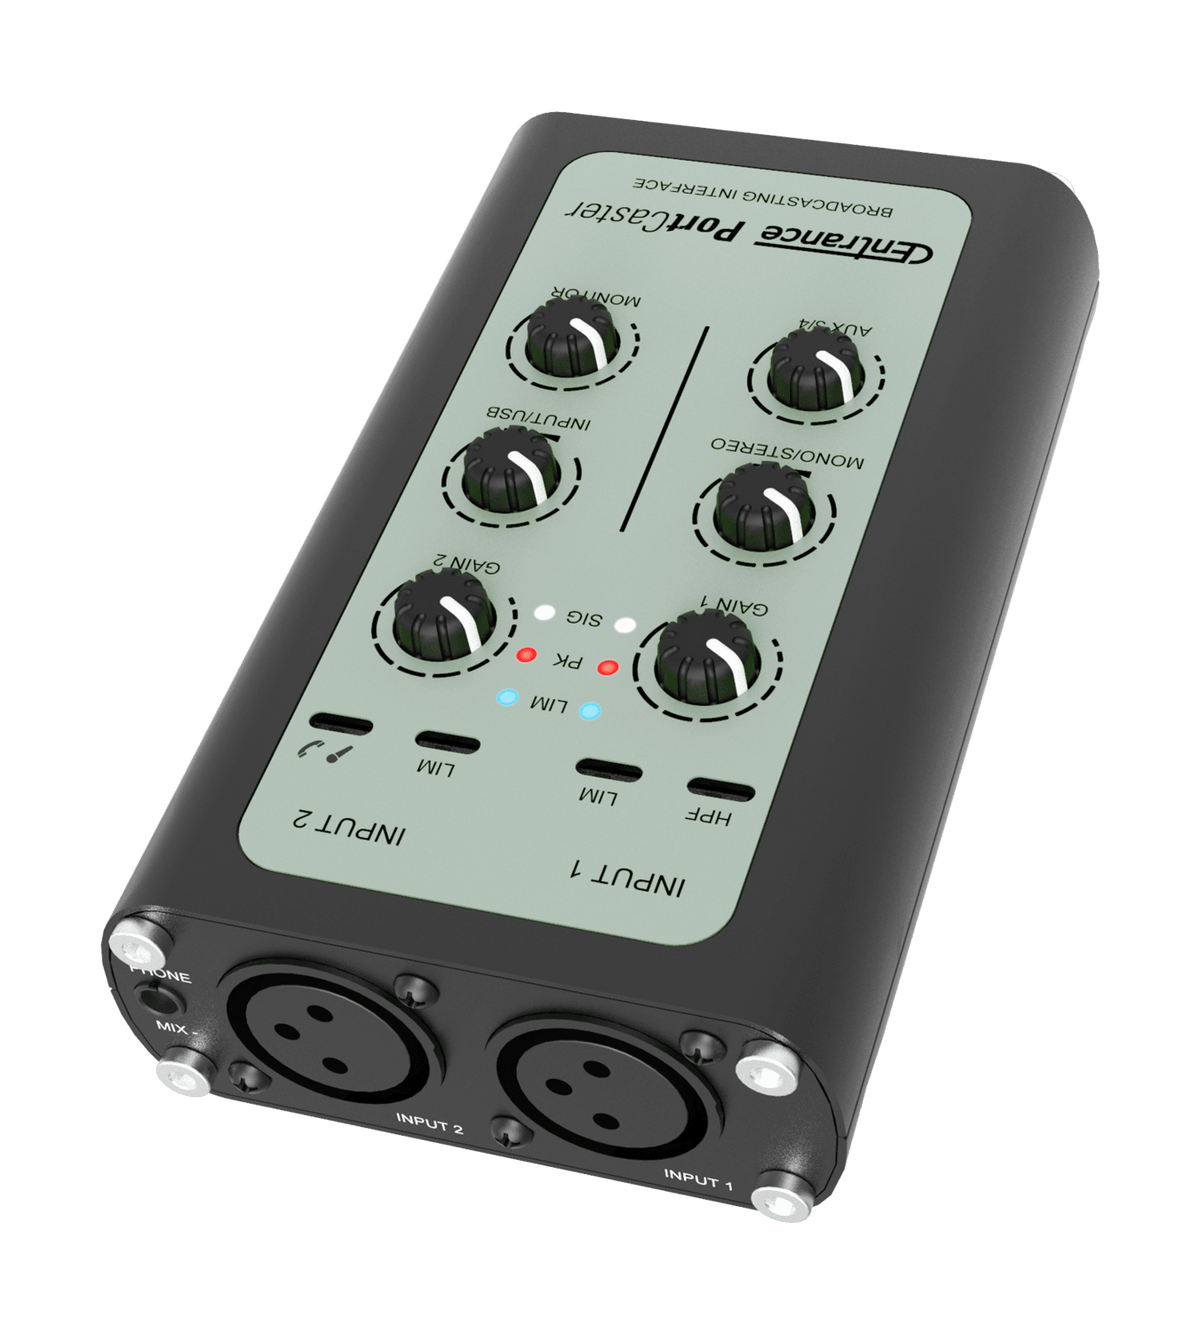 Centrance PortCaster Portable Mixer, Recorder and USB-C Audio Interface for Voice - Koala Audio